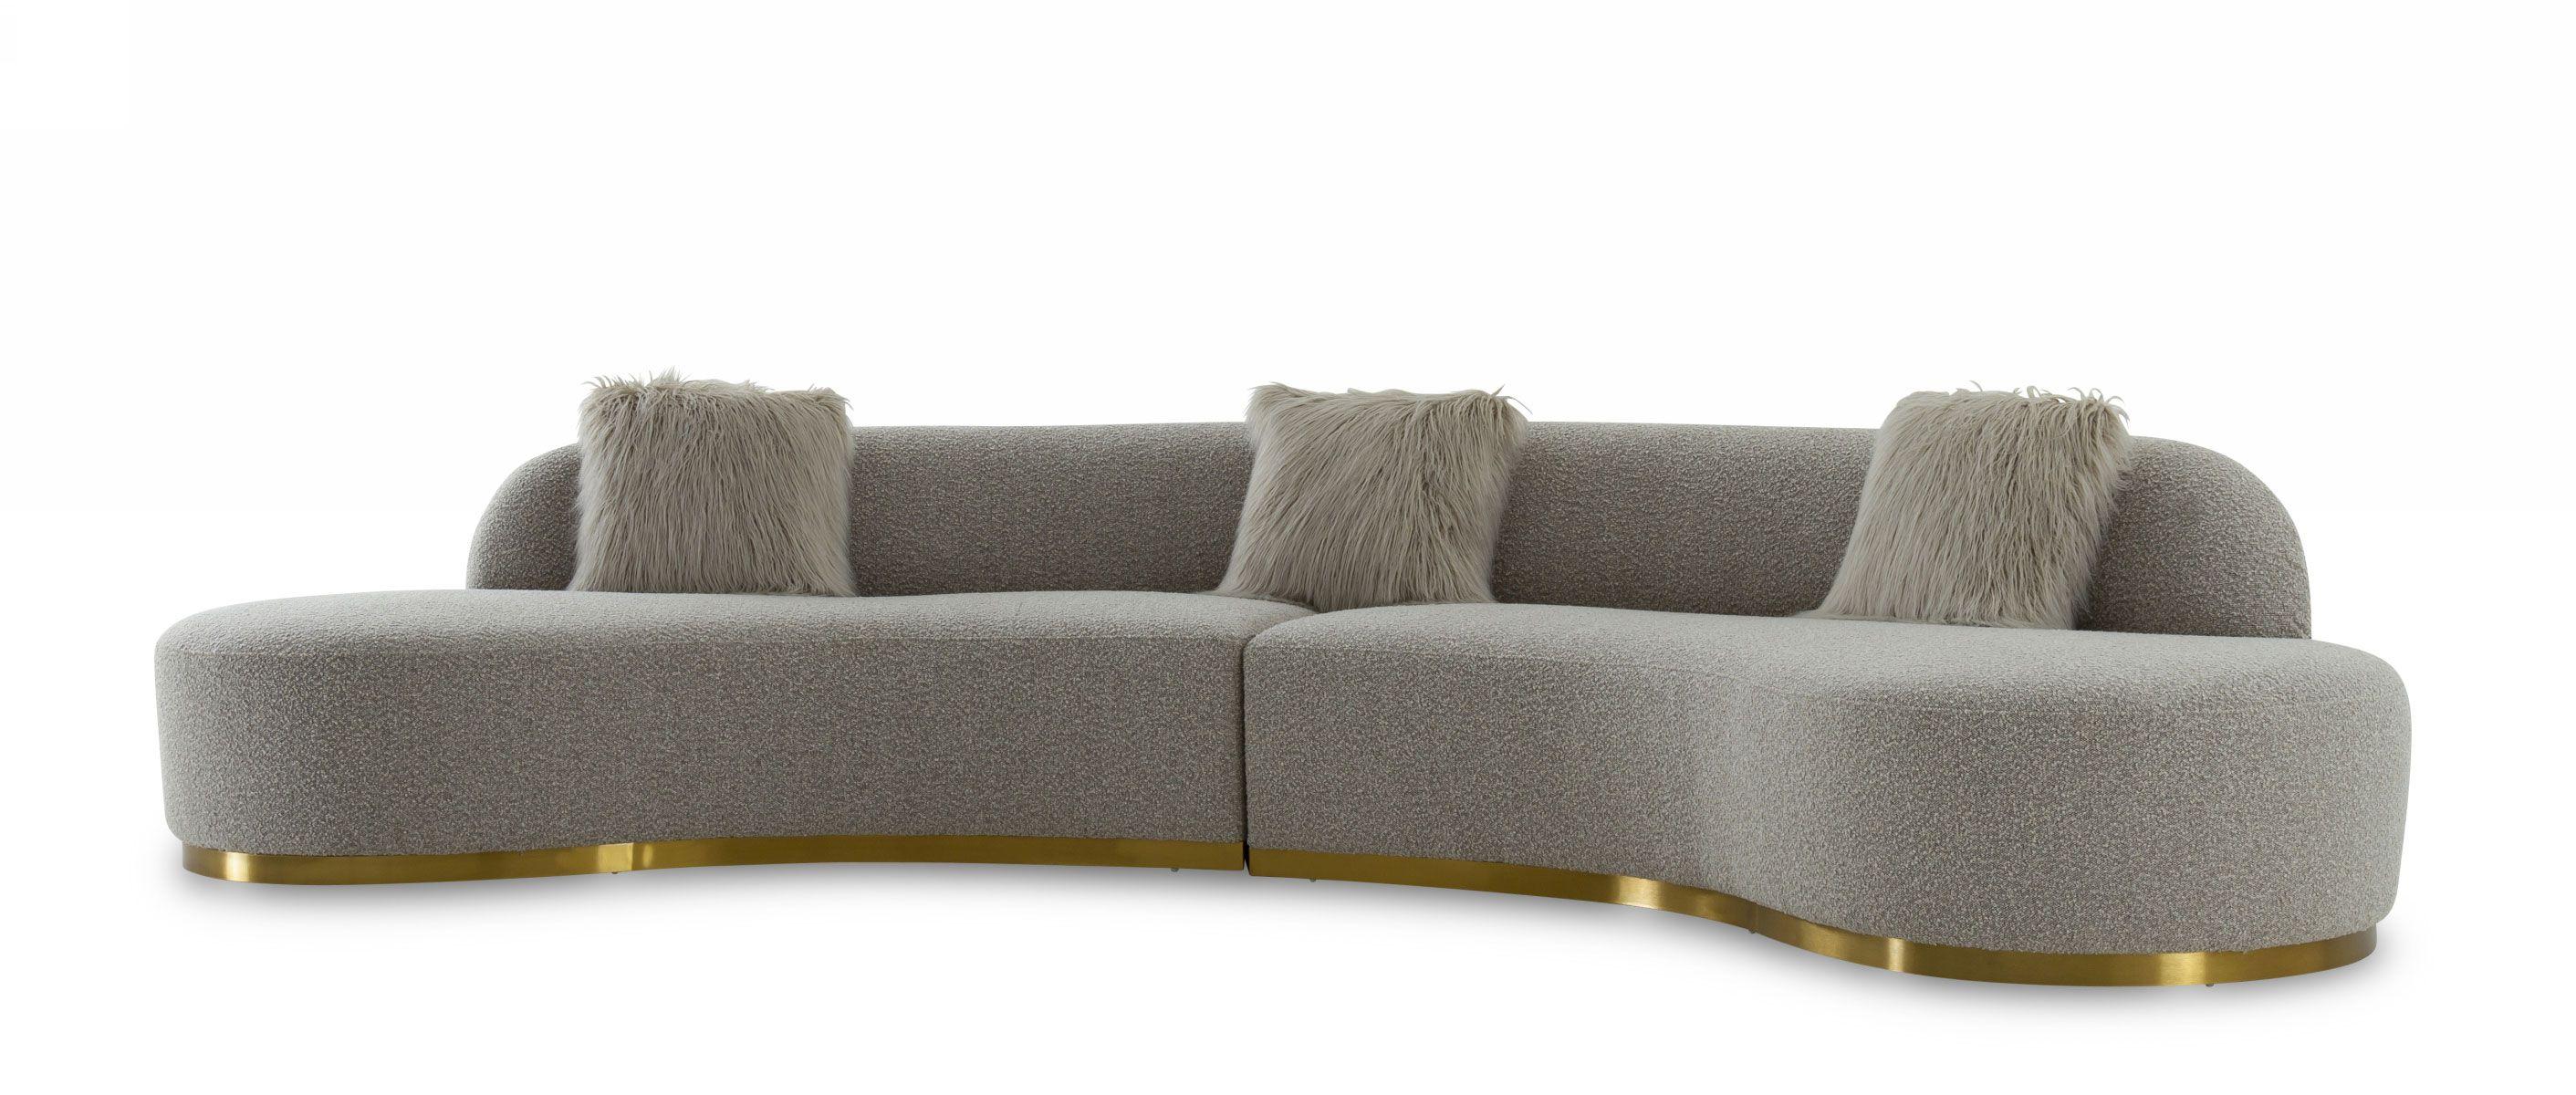 Contemporary, Modern Sectional Sofa VGODZW-943 VGODZW-943 in Gray Fabric